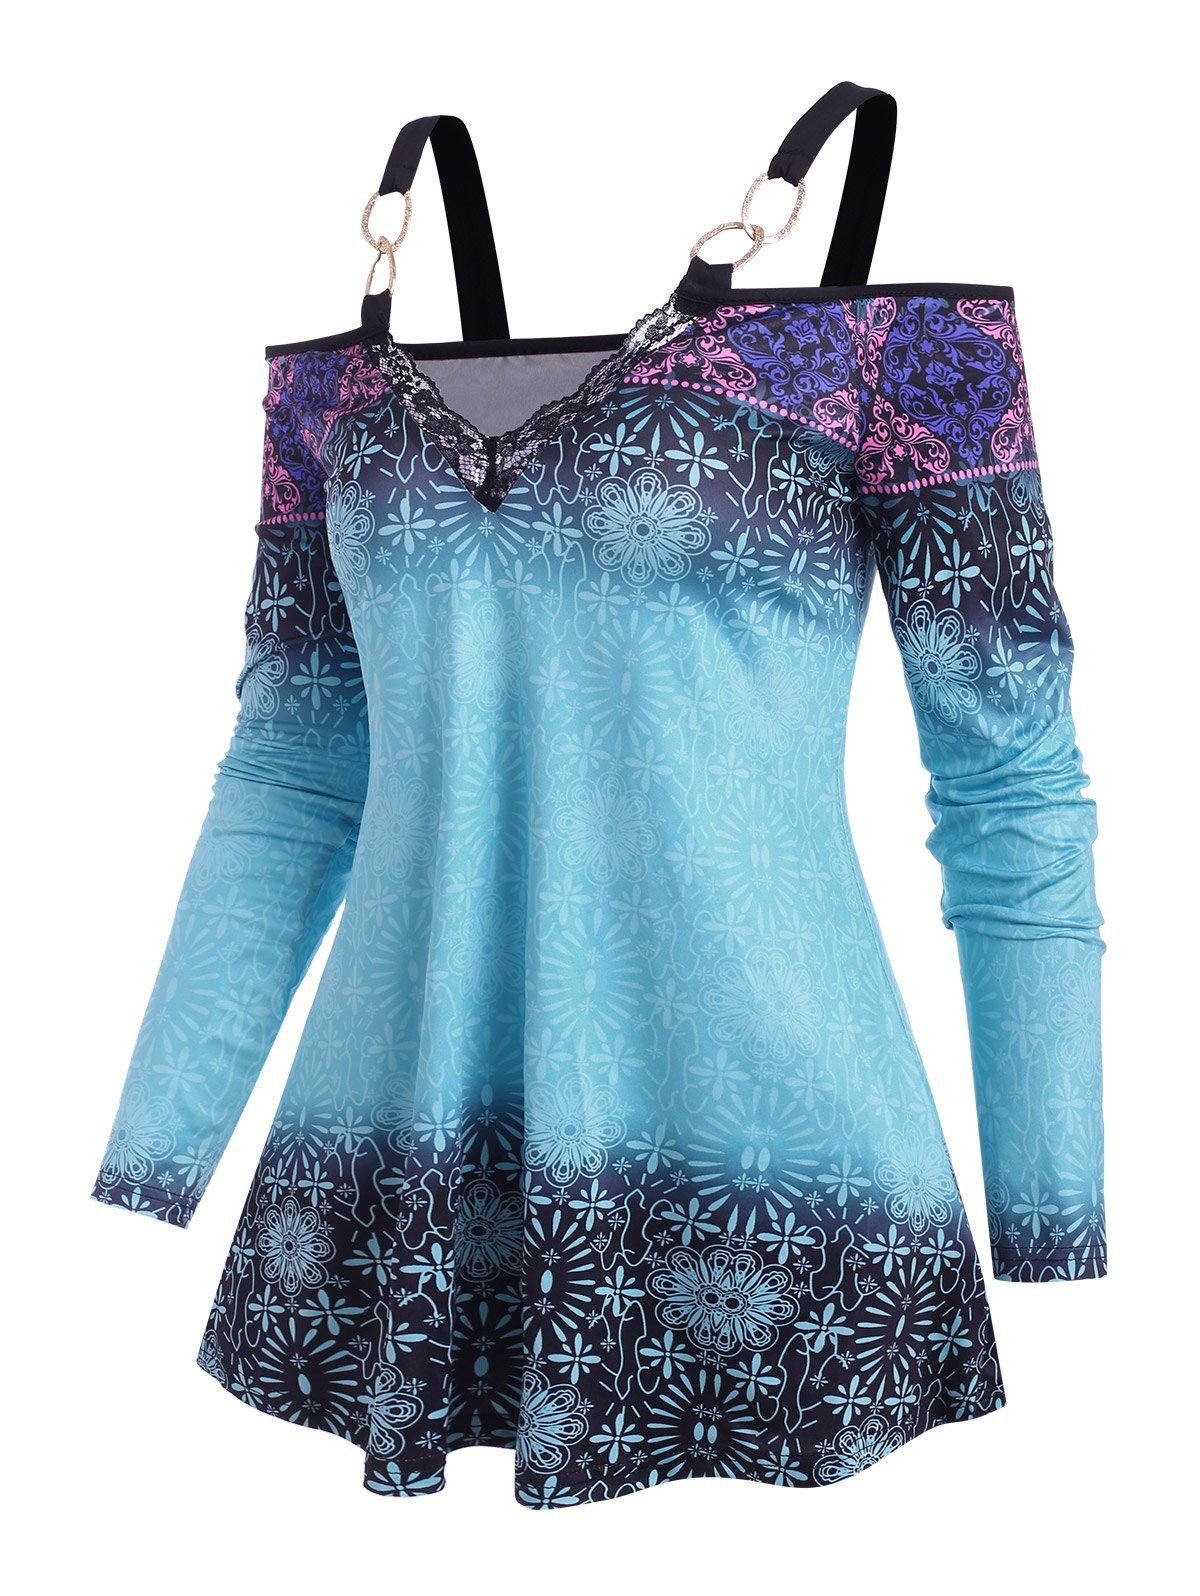 Ombre Flower Print Open Shoulder Lace Insert T Shirt - LIGHT BLUE XL